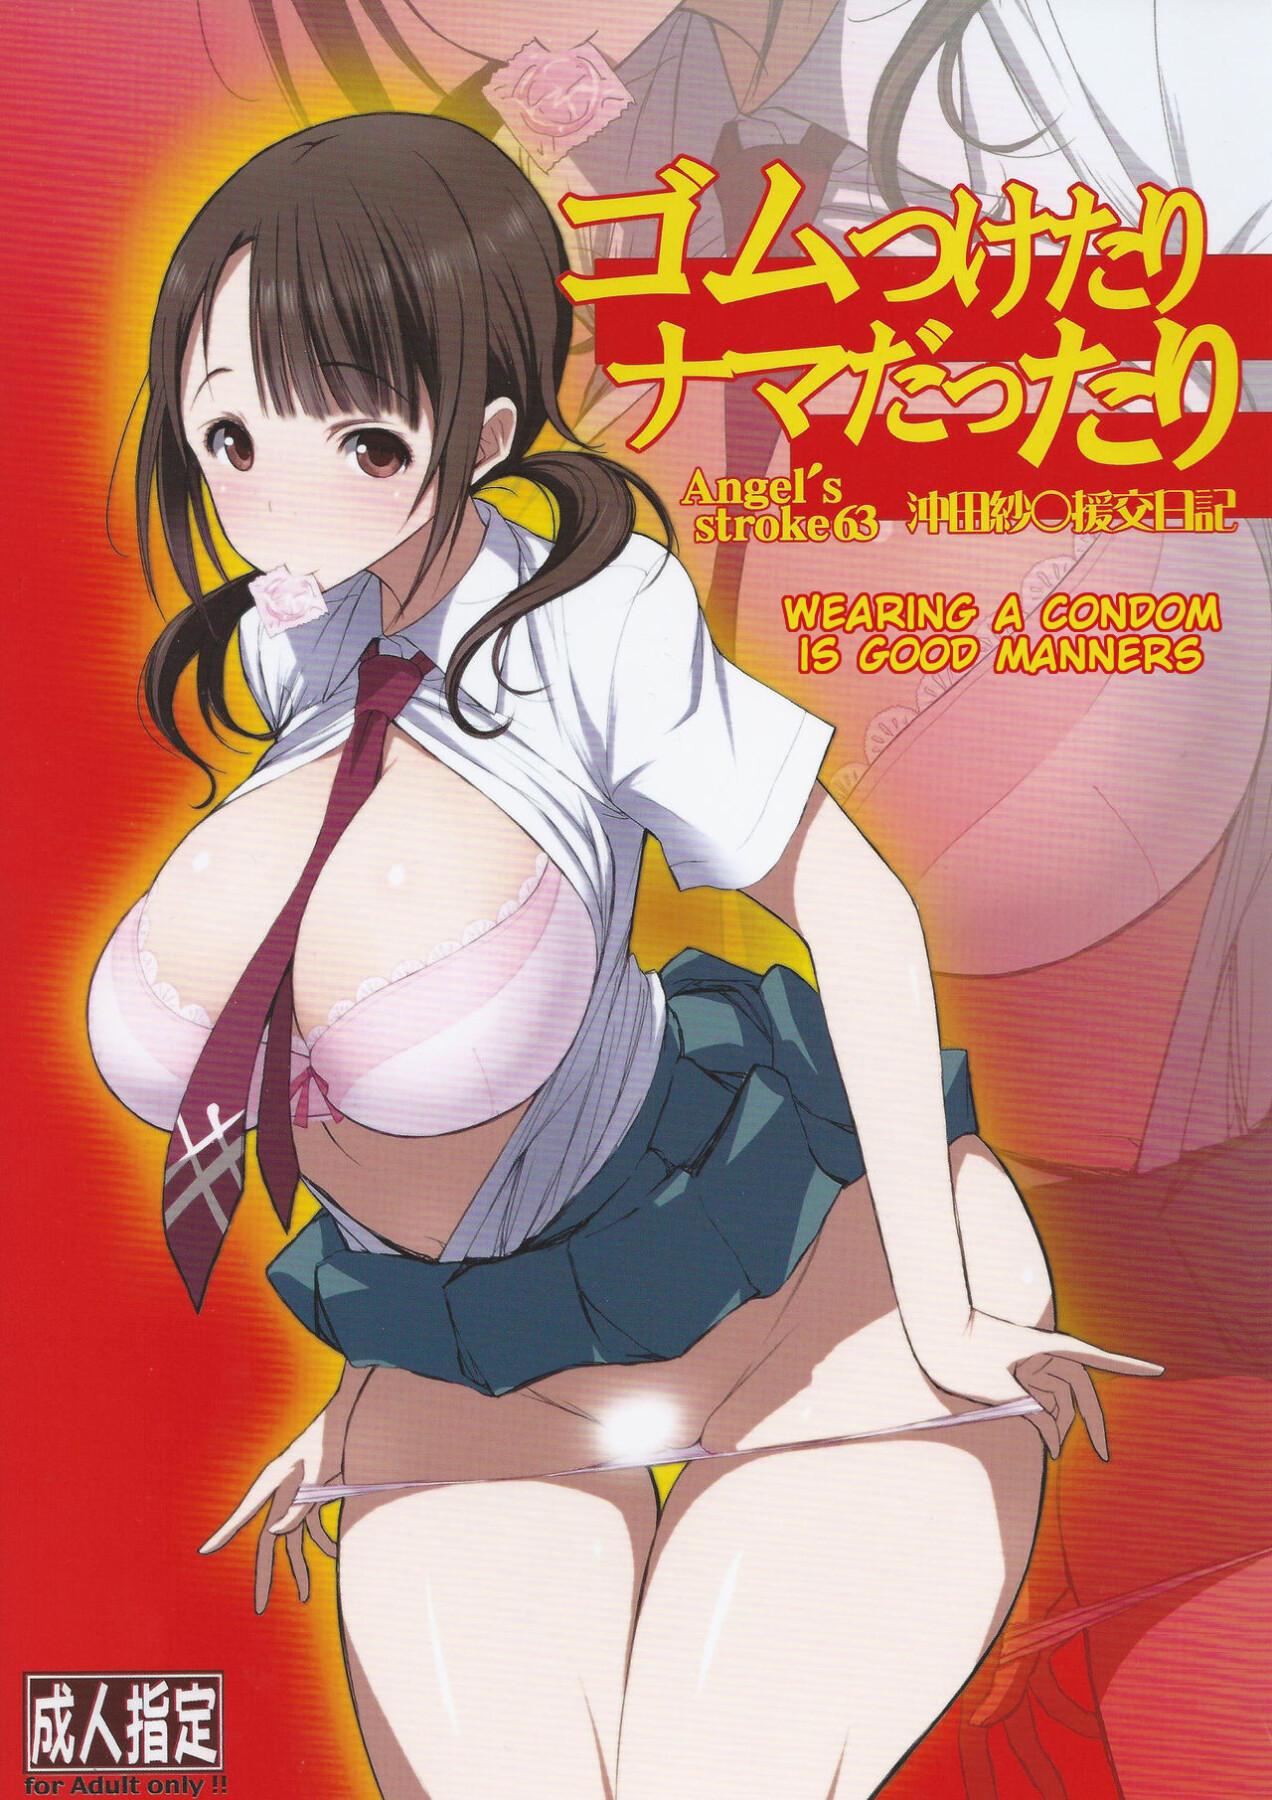 Hentai Manga Comic-Angel's stroke 63: Wearing a condom is good manners Okita Sawa Enkou Nikk-Read-1